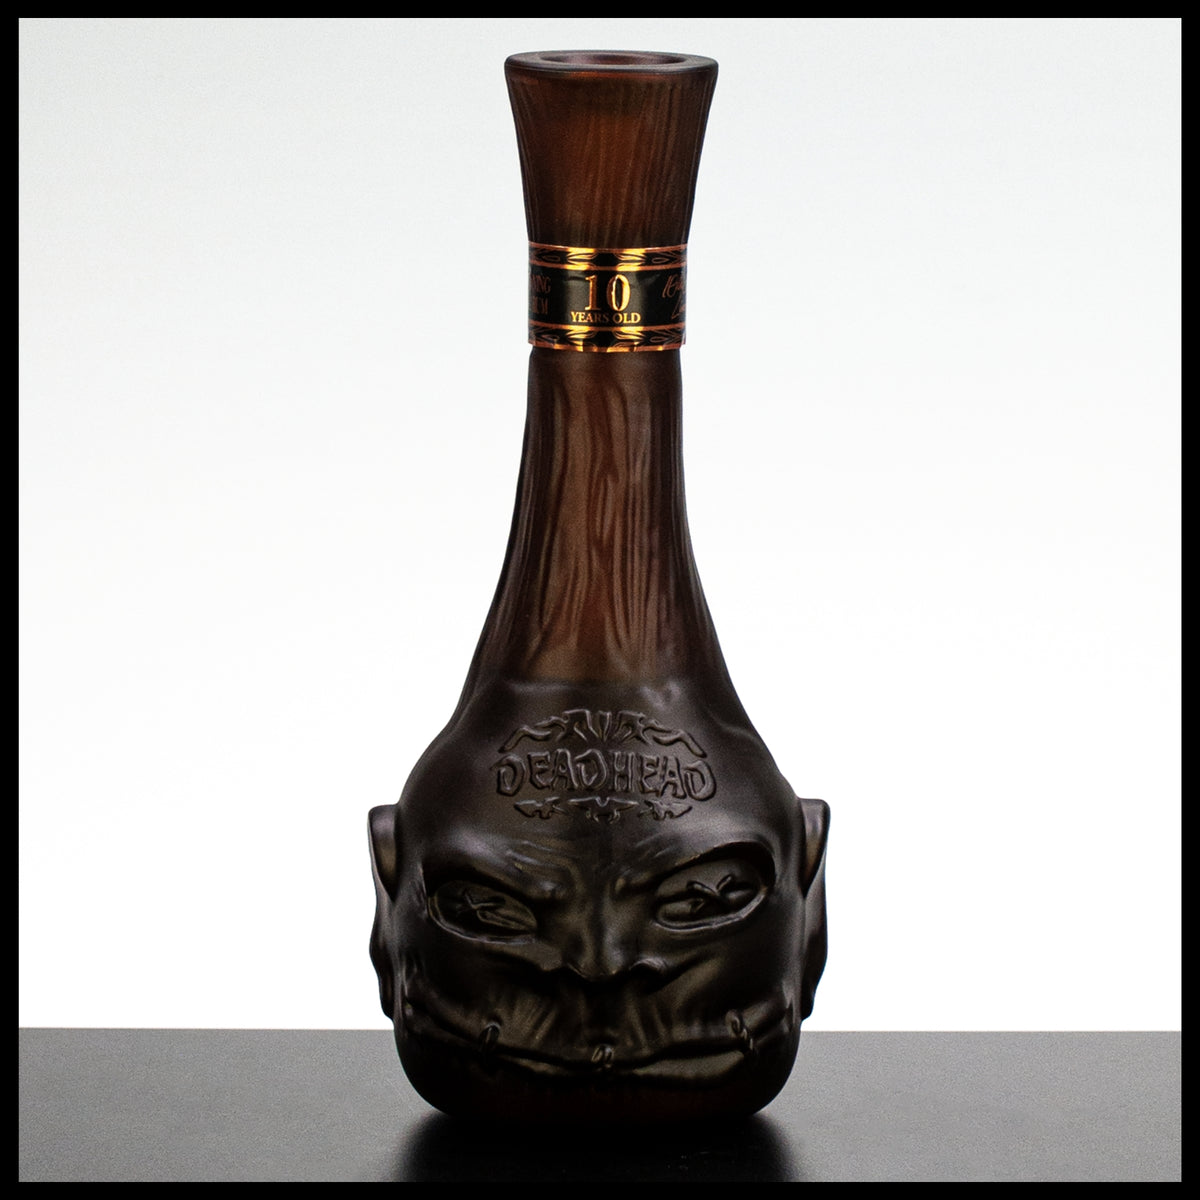 Deadhead 10 YO Anniversary Limited Edition Rum 0,7L - 40% Vol. - Trinklusiv